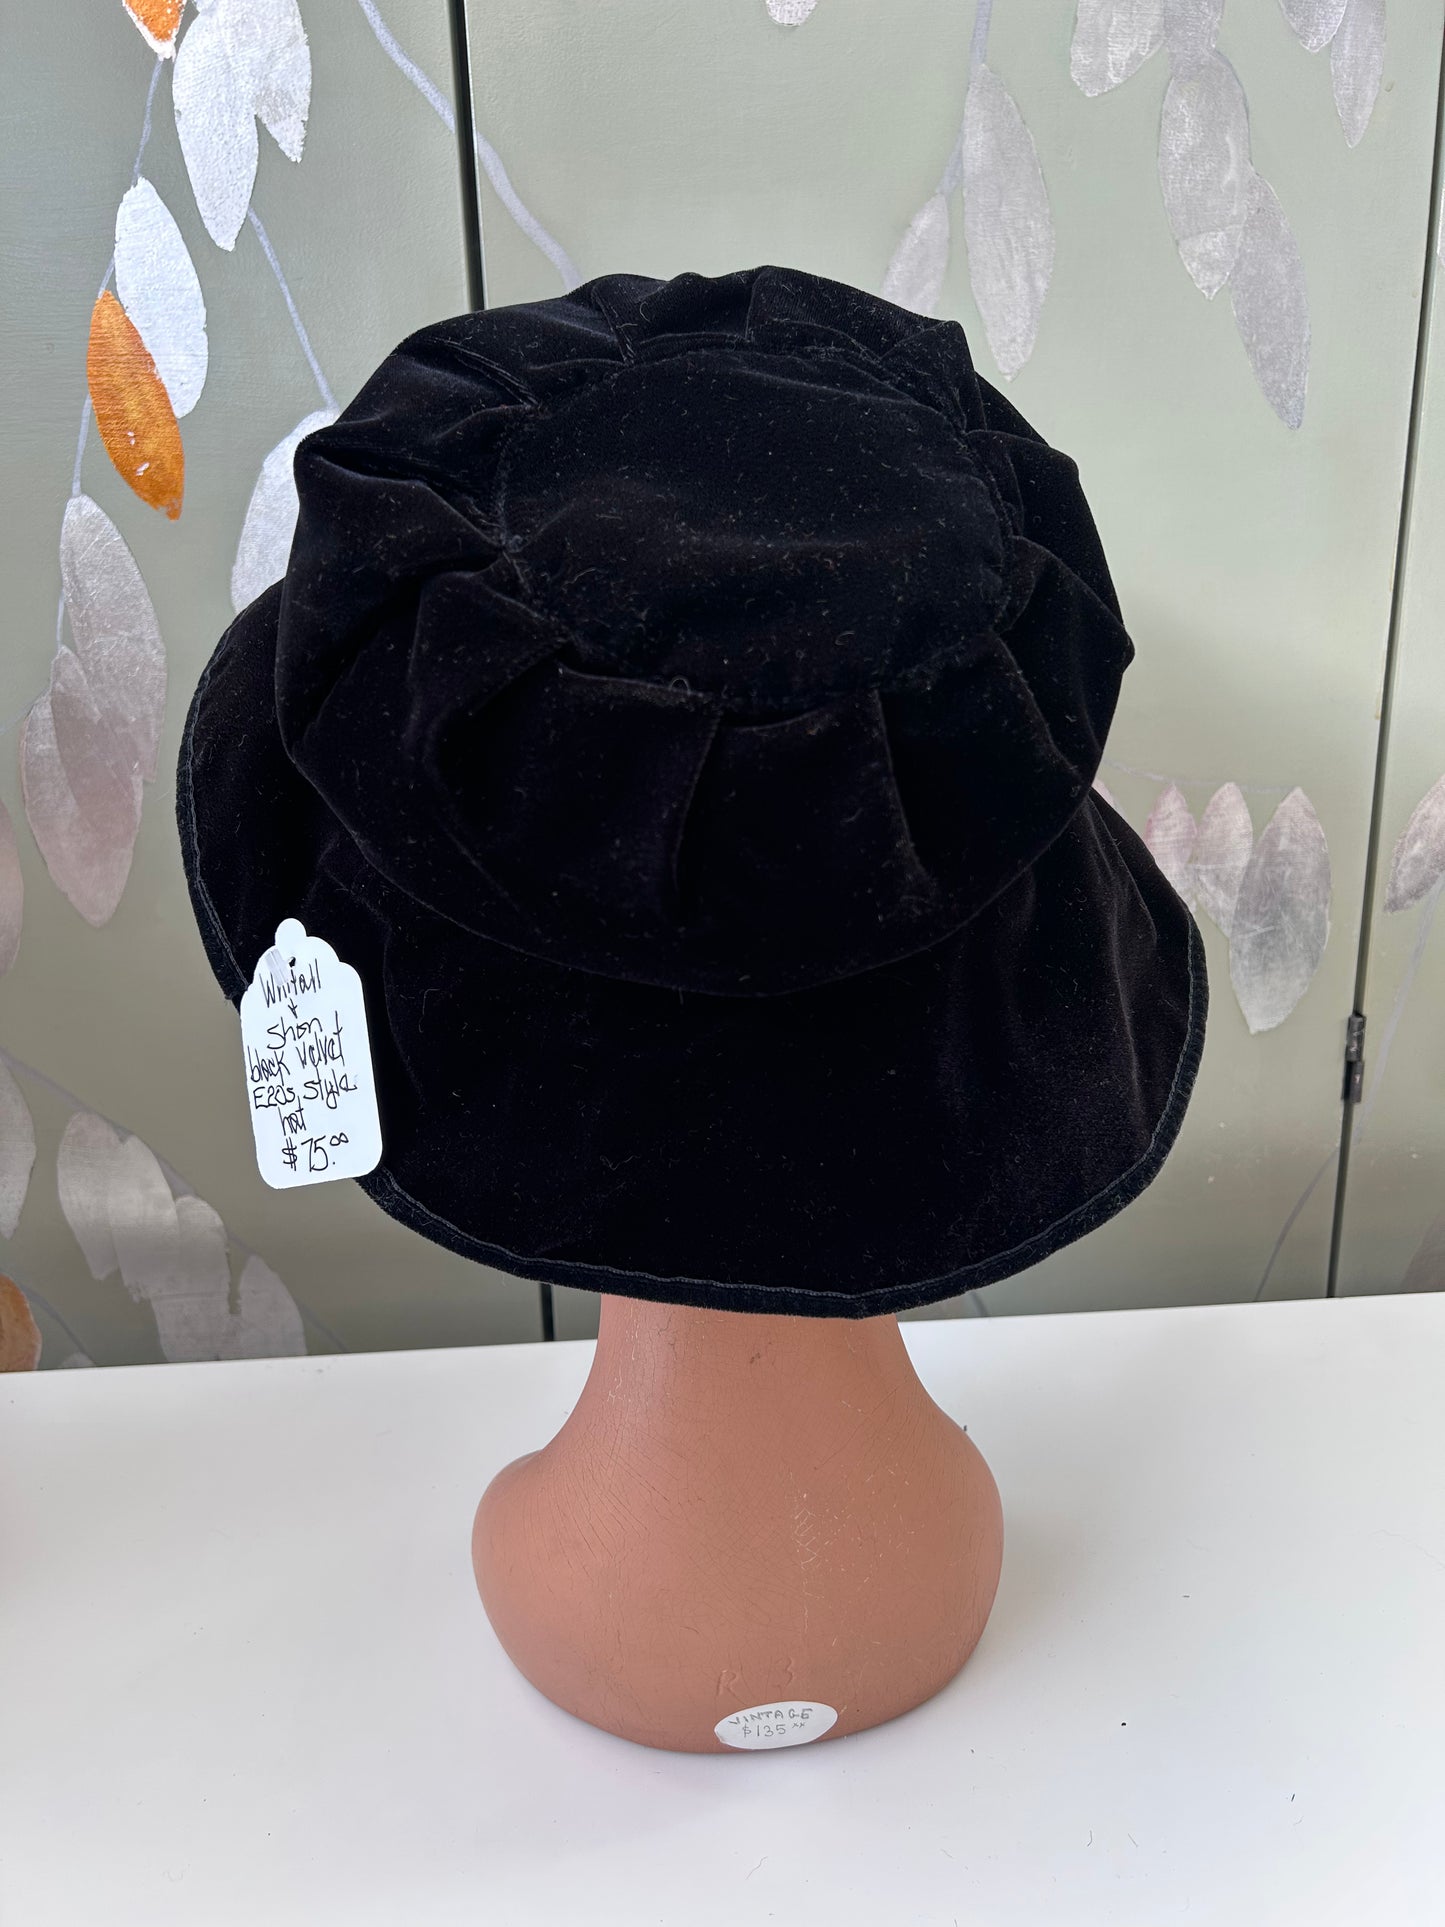 1920s Style Black Velvet Hat with Roses by Whitall & Shon